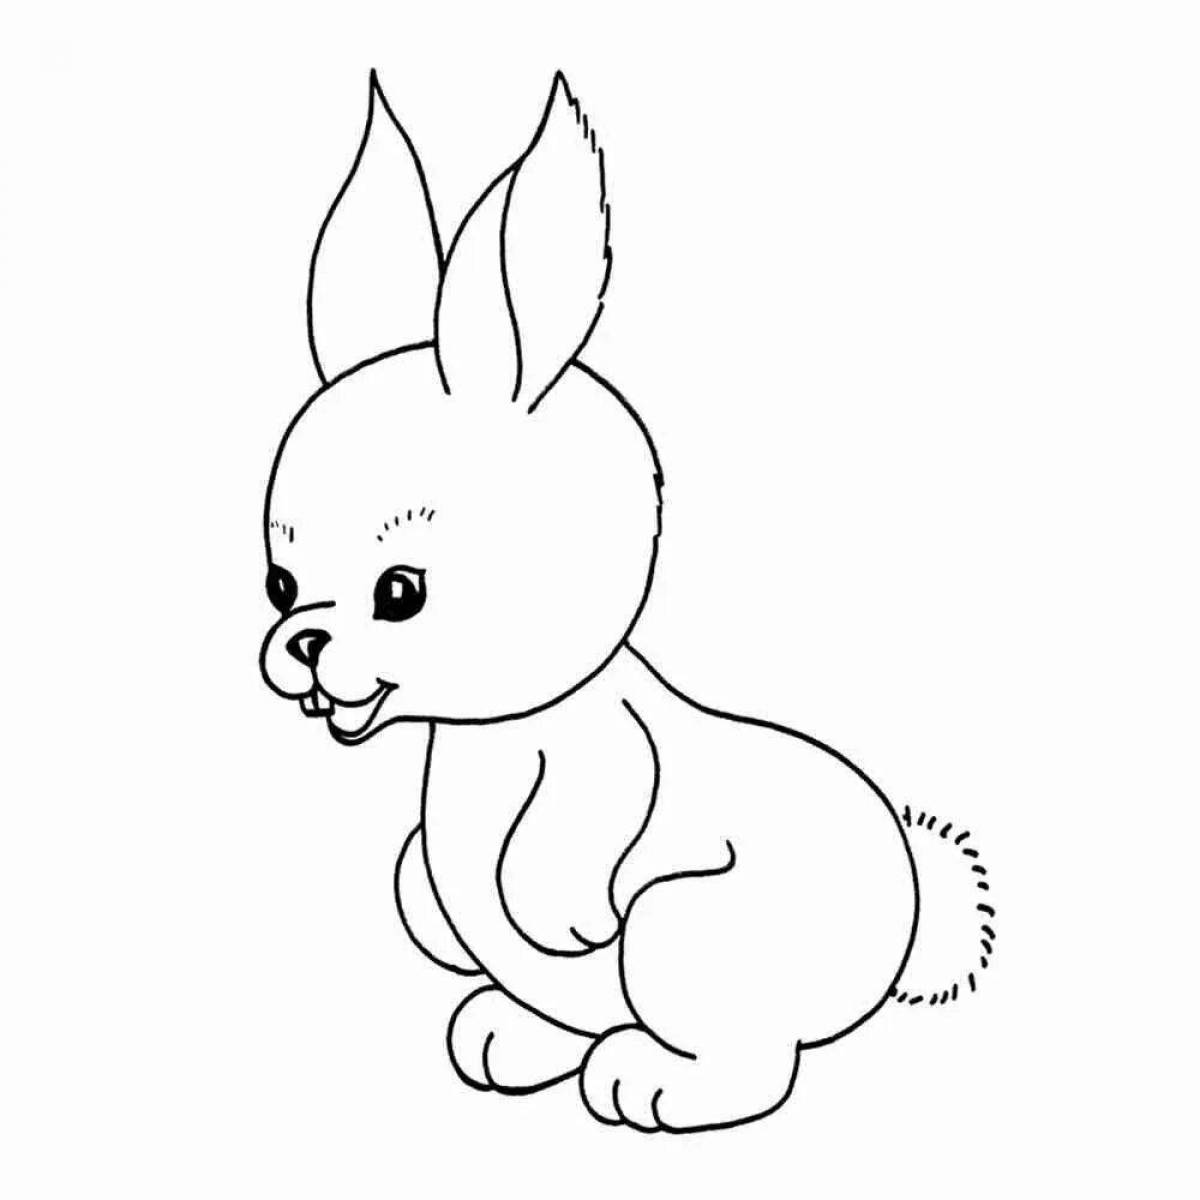 Baby bunny #10